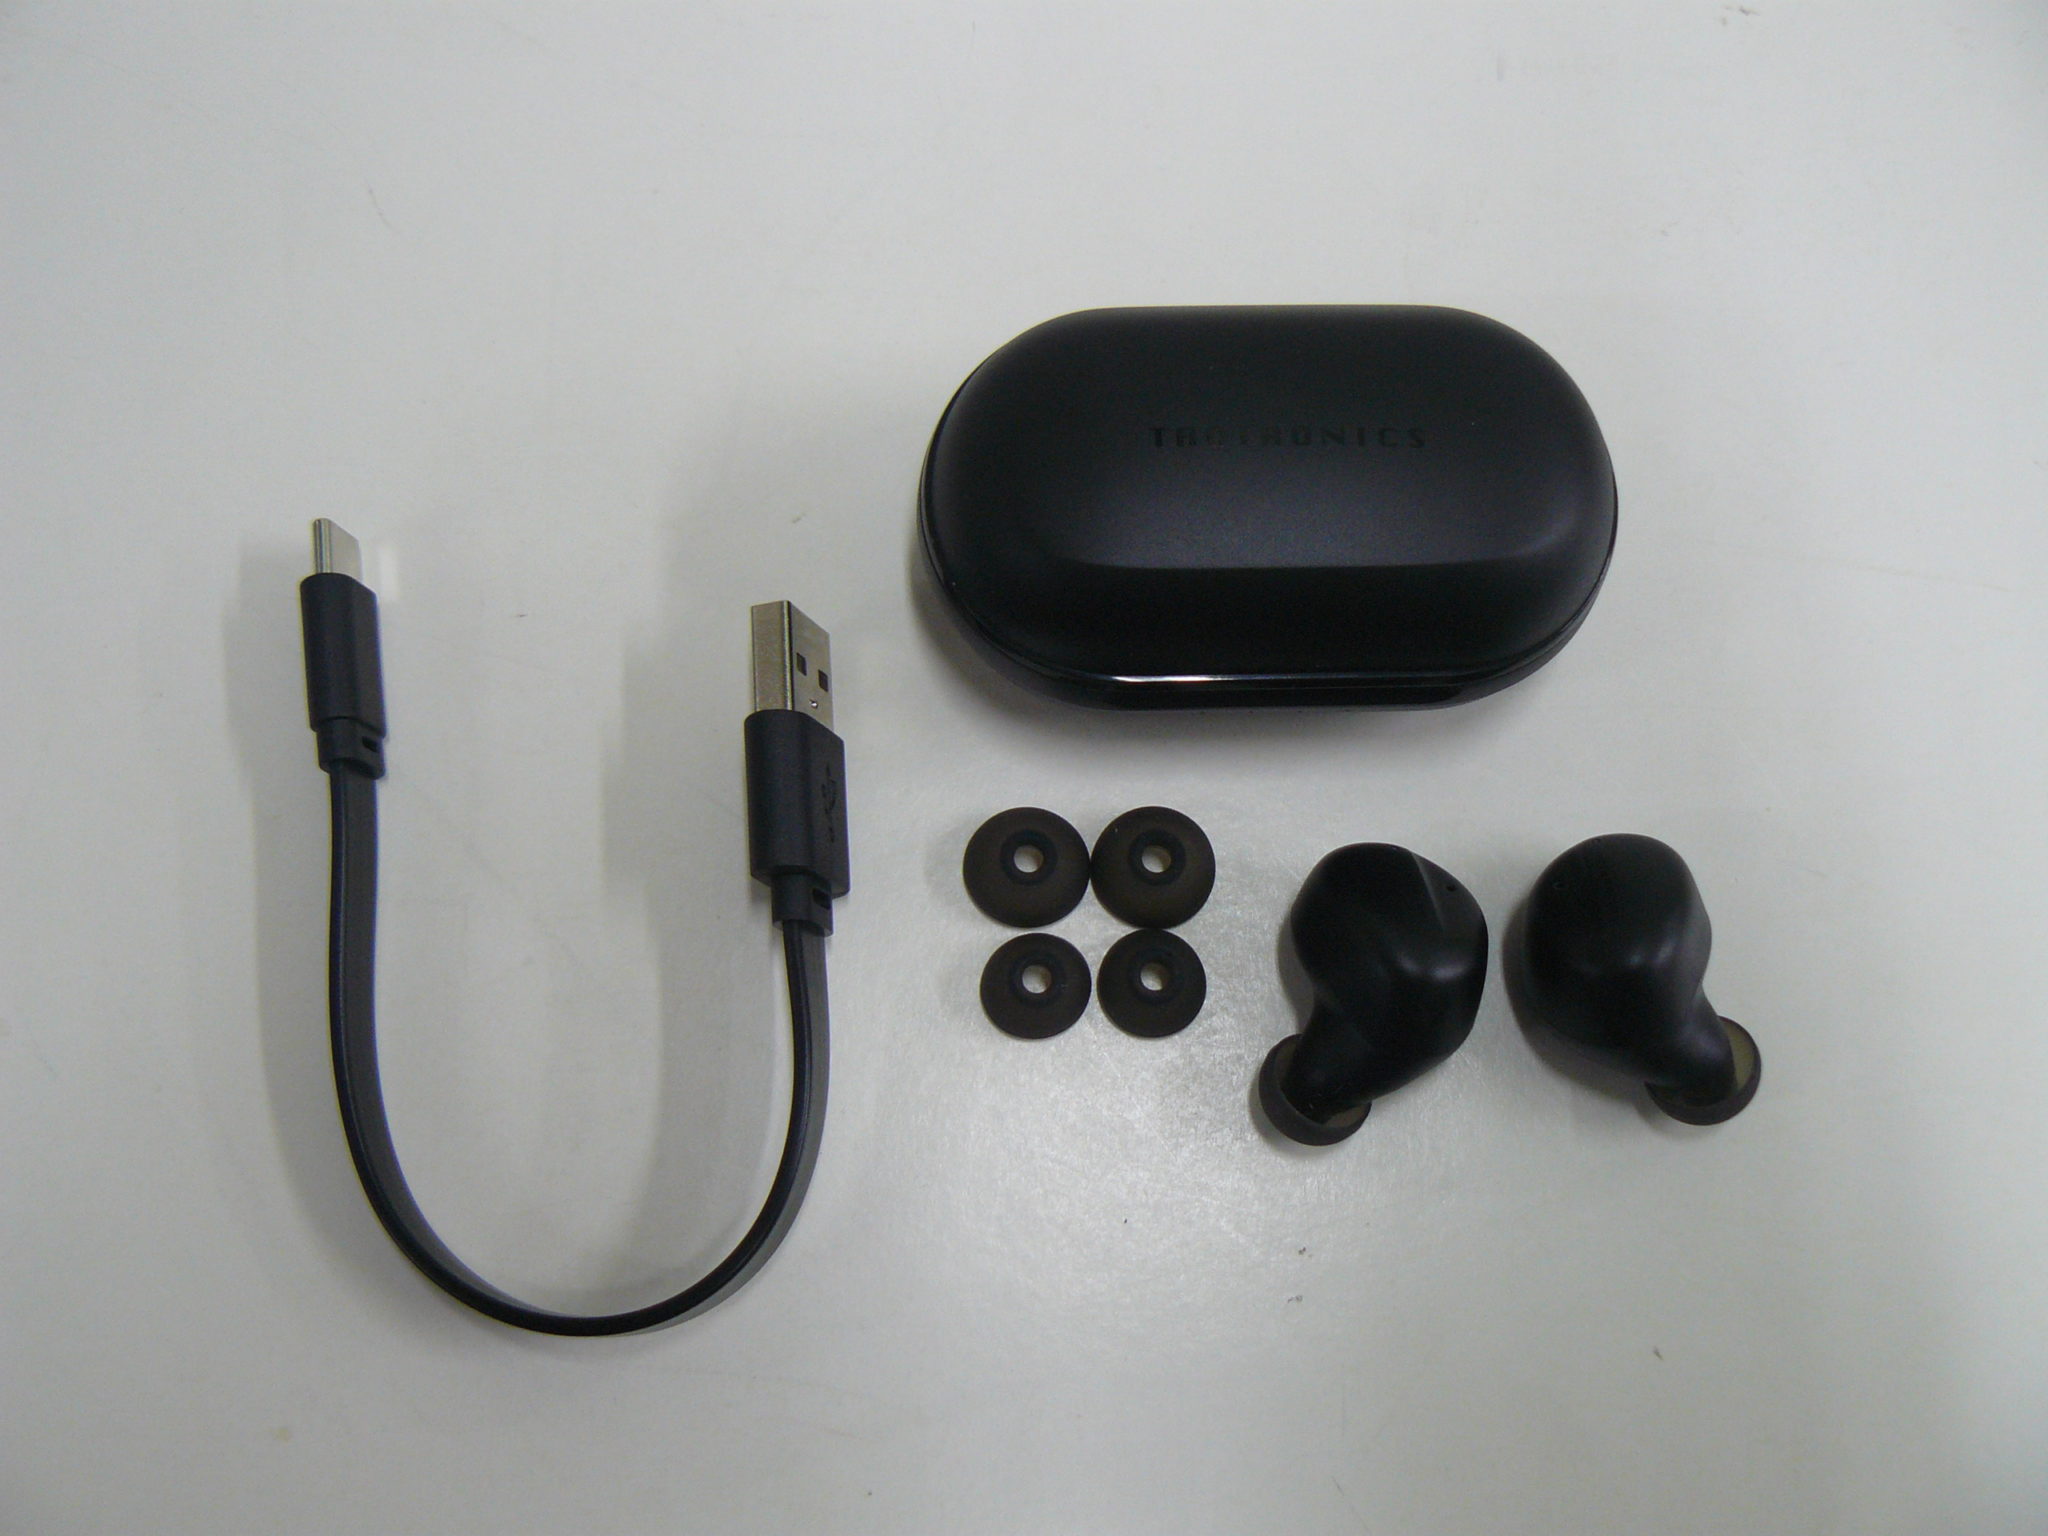 Taotronics Soundliberty 94 True Wireless Review - Headphone Dungeon